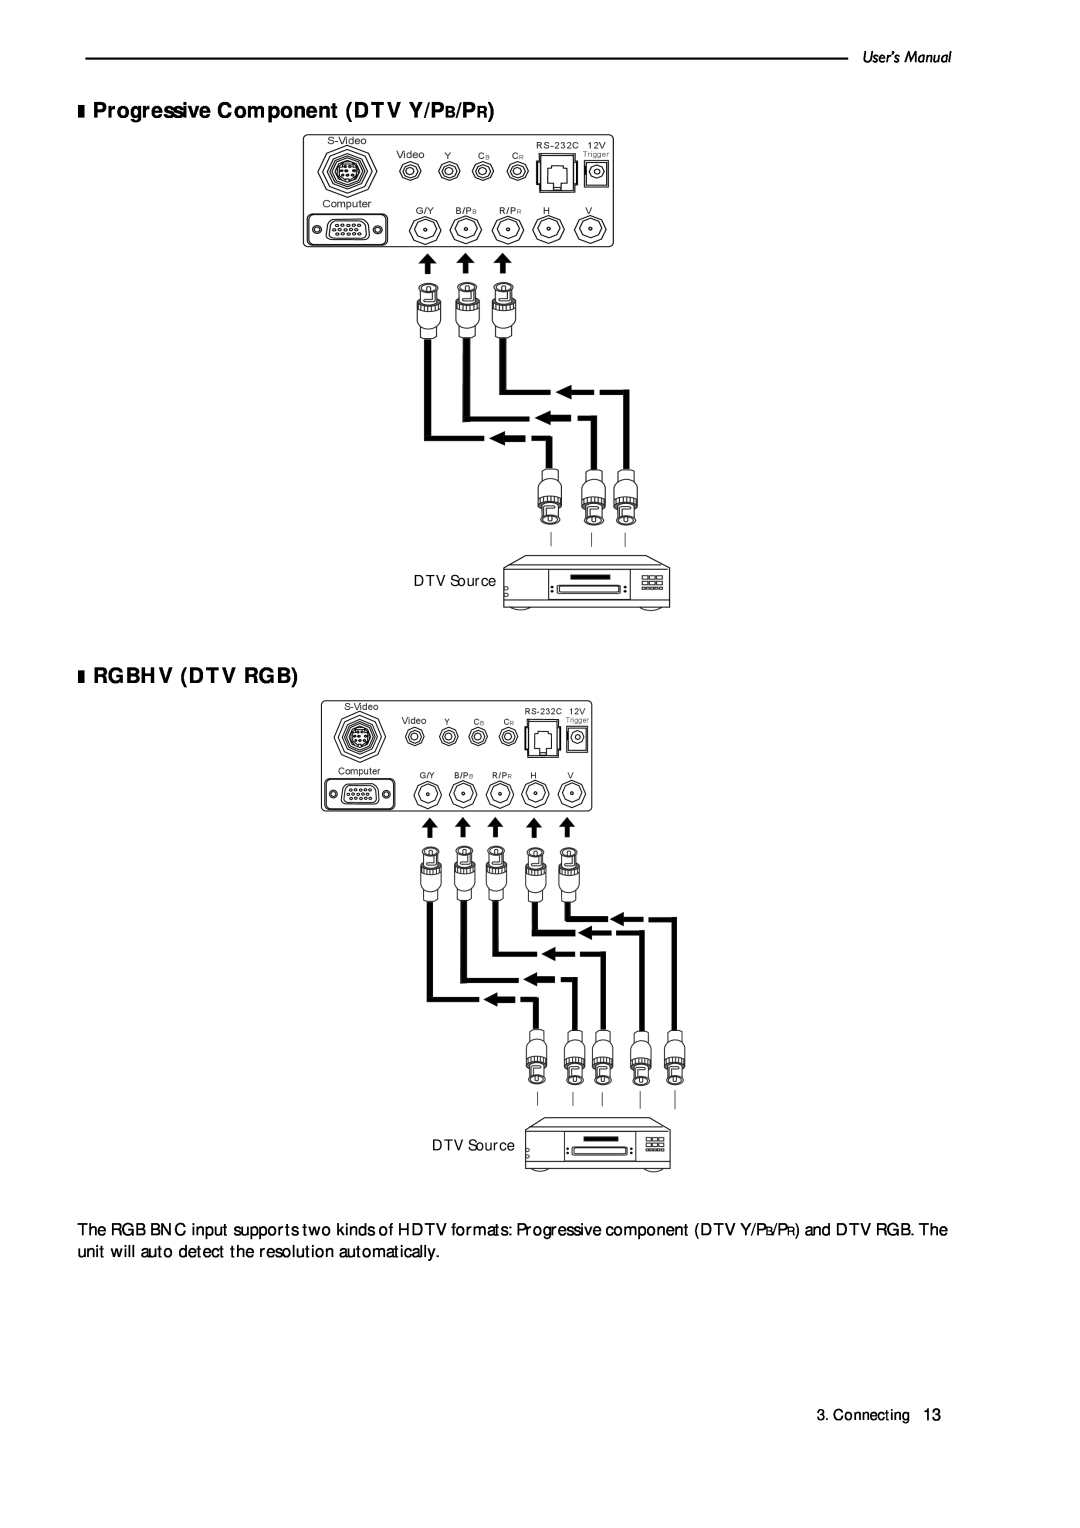 Runco CL-500 Progressive Component DTV Y/PB/PR, Rgbhv Dtv Rgb, DTV Source, Connecting, S-Video, Computer, RS-232C, B/Pb 